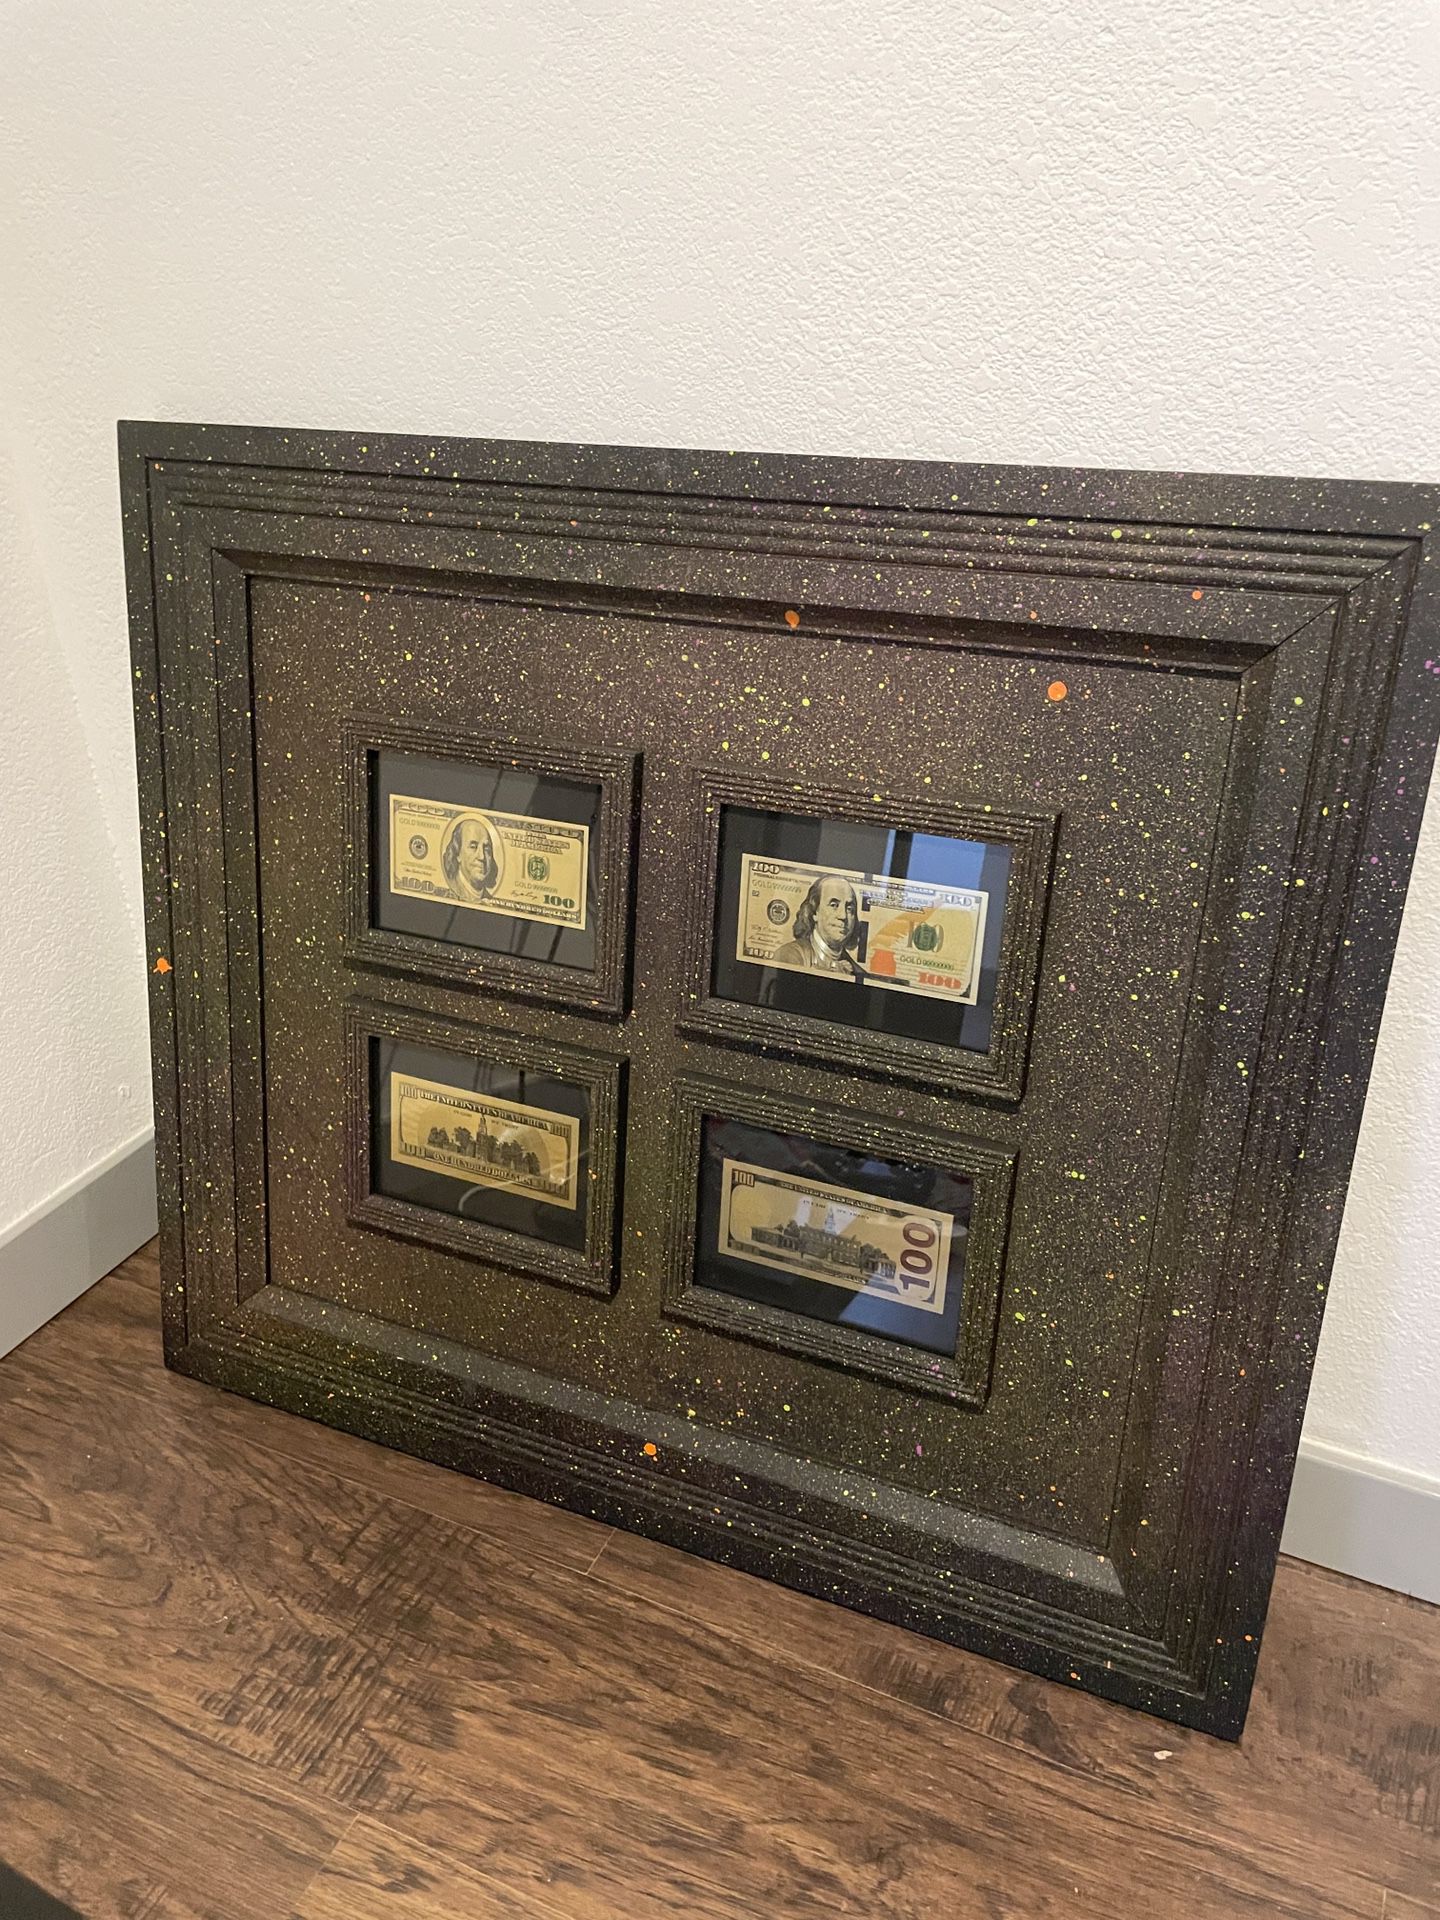 Gold Money Artwork - Framed $100 Bills